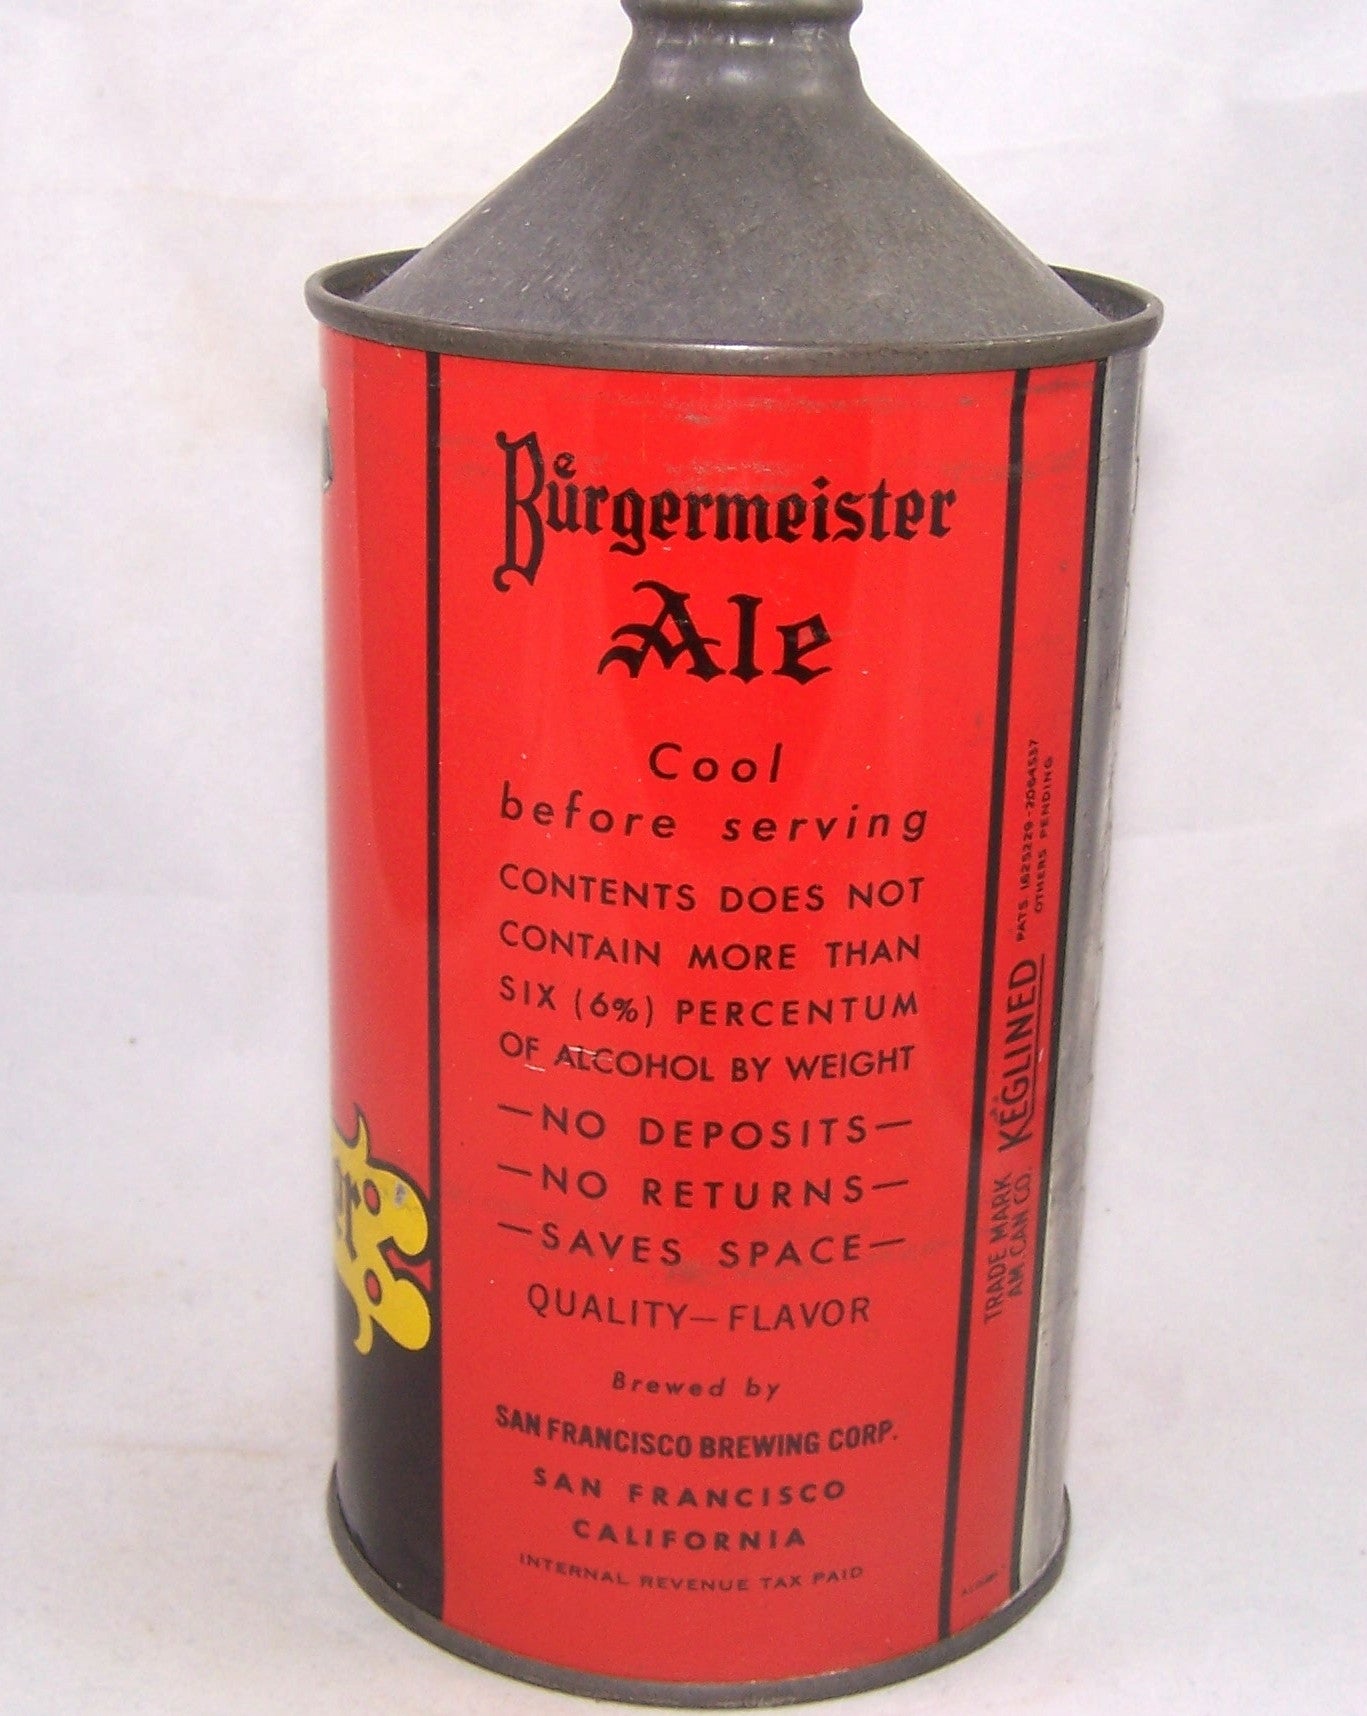 Burgermeister Ale USBC 204-17, Tougher Variation, Grade 1/1+ Sold on 06/27/17